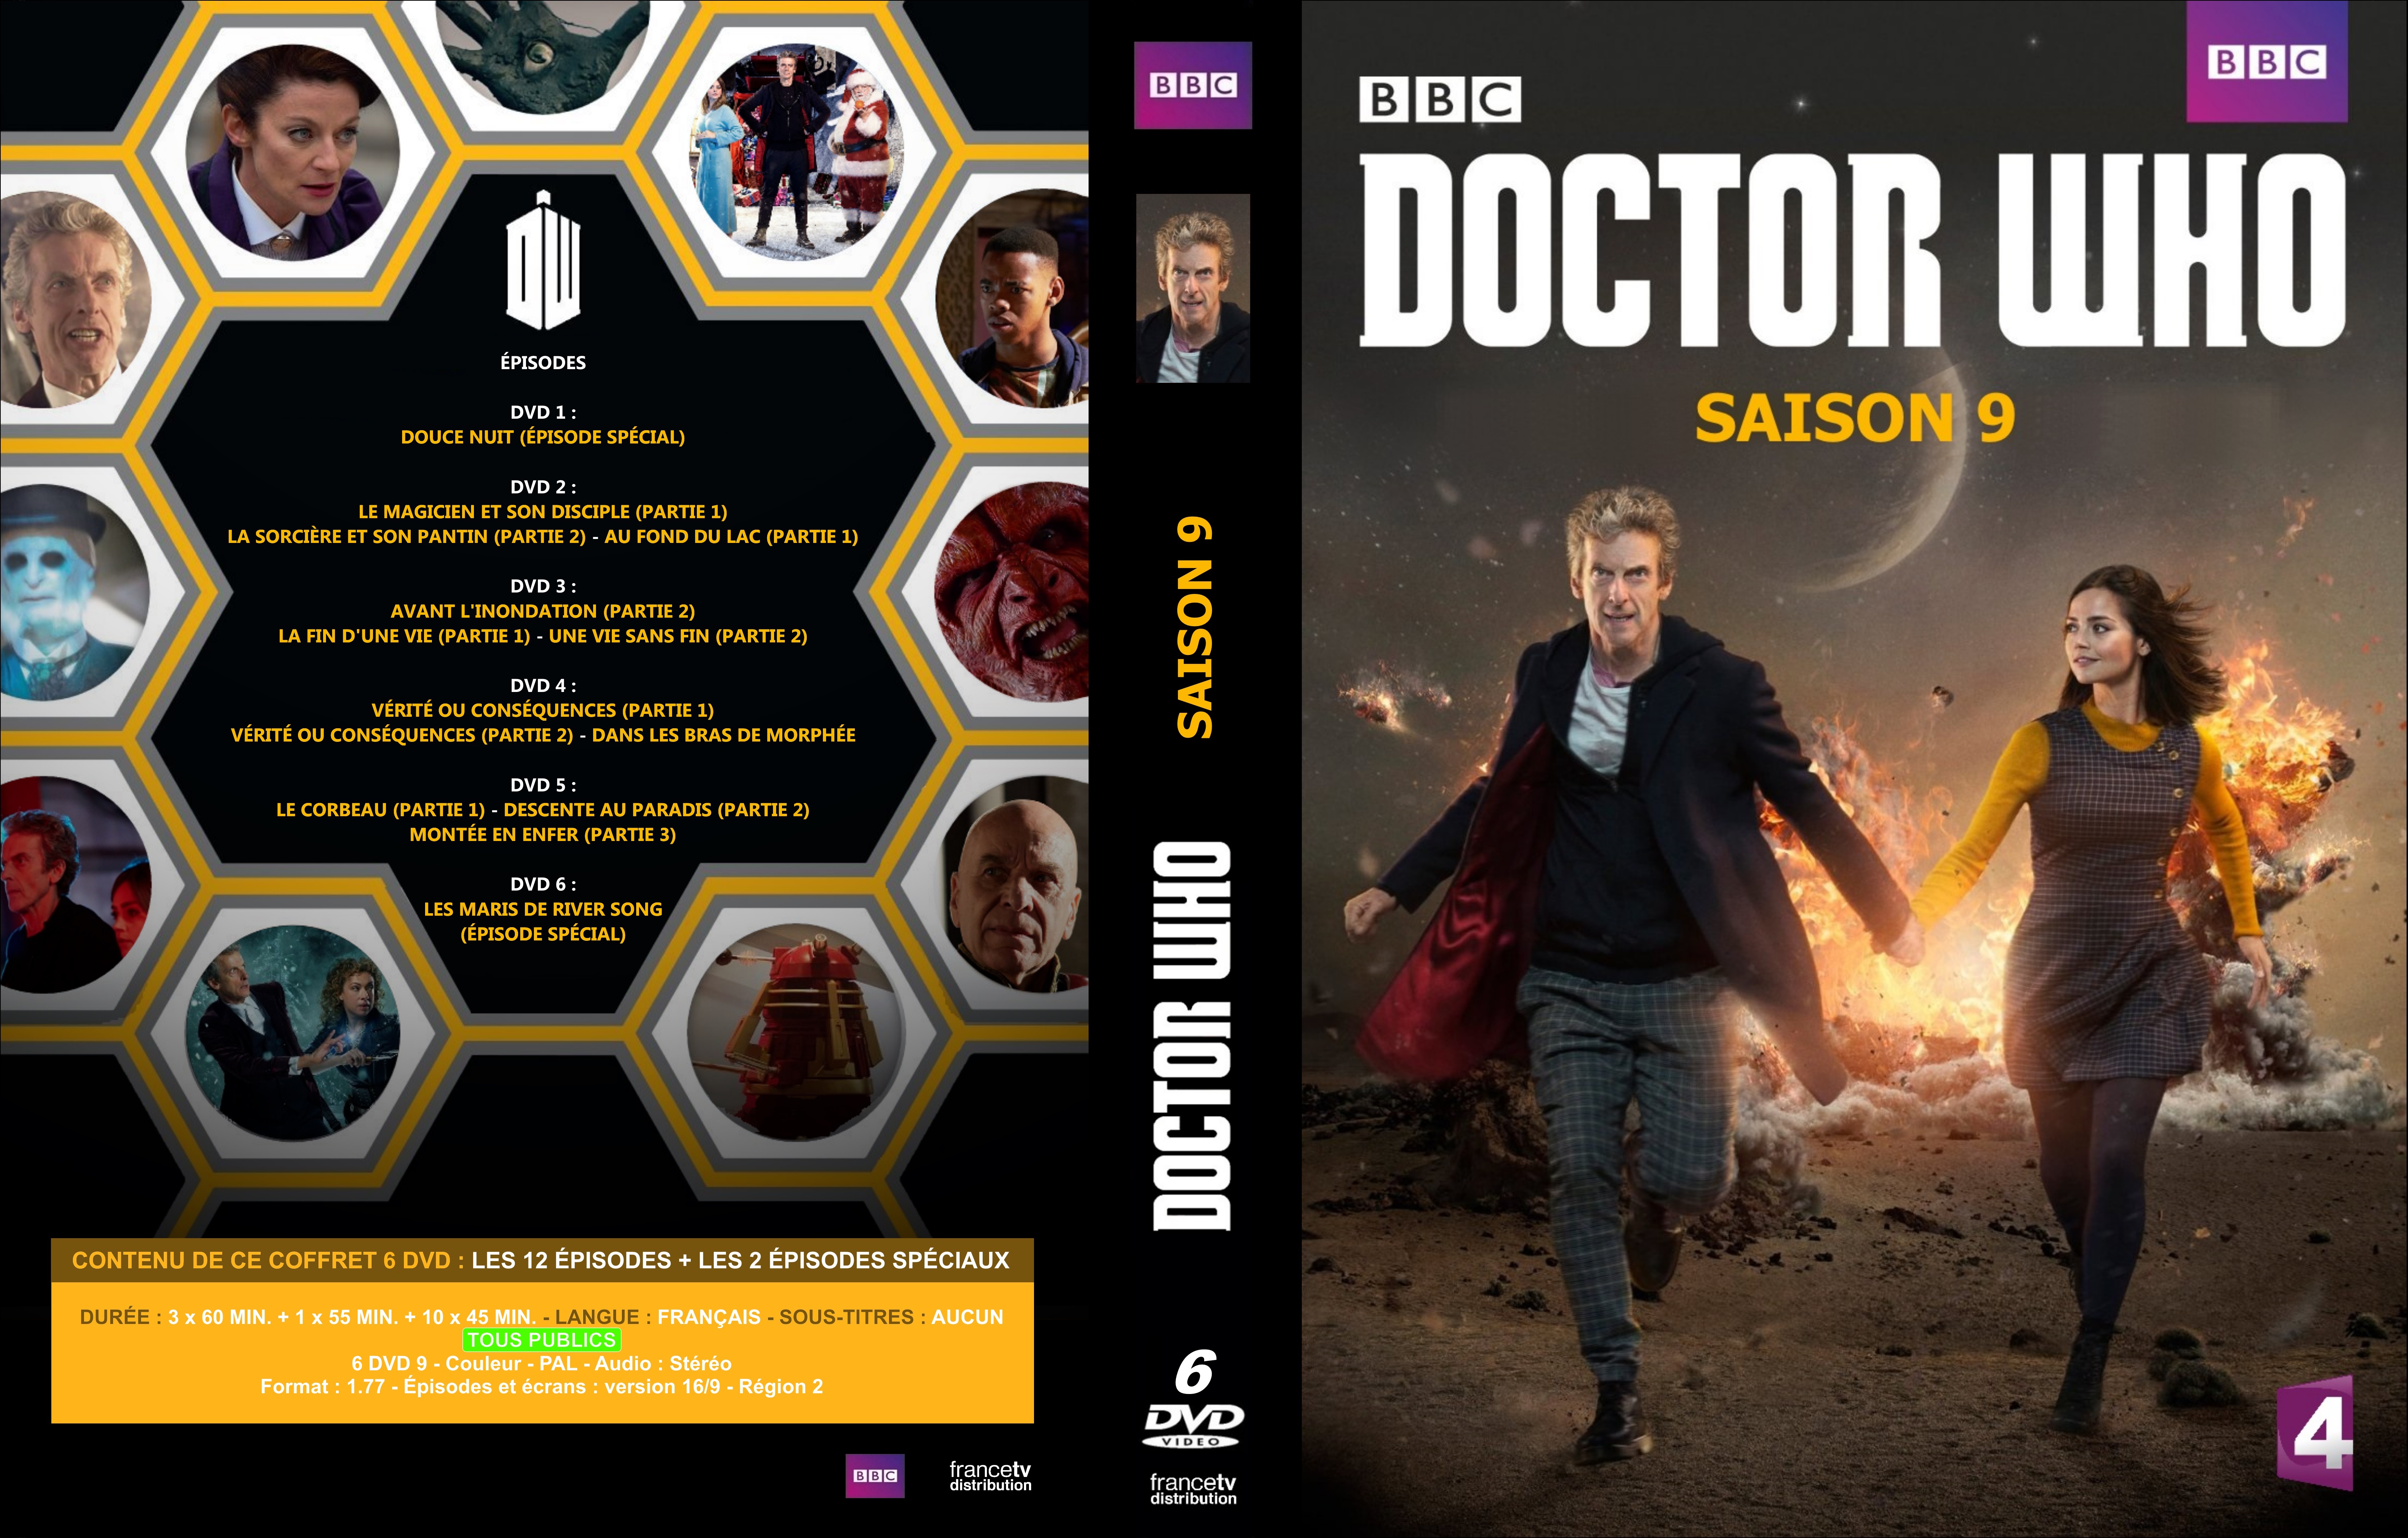 Jaquette DVD Doctor Who Saison 9 custom